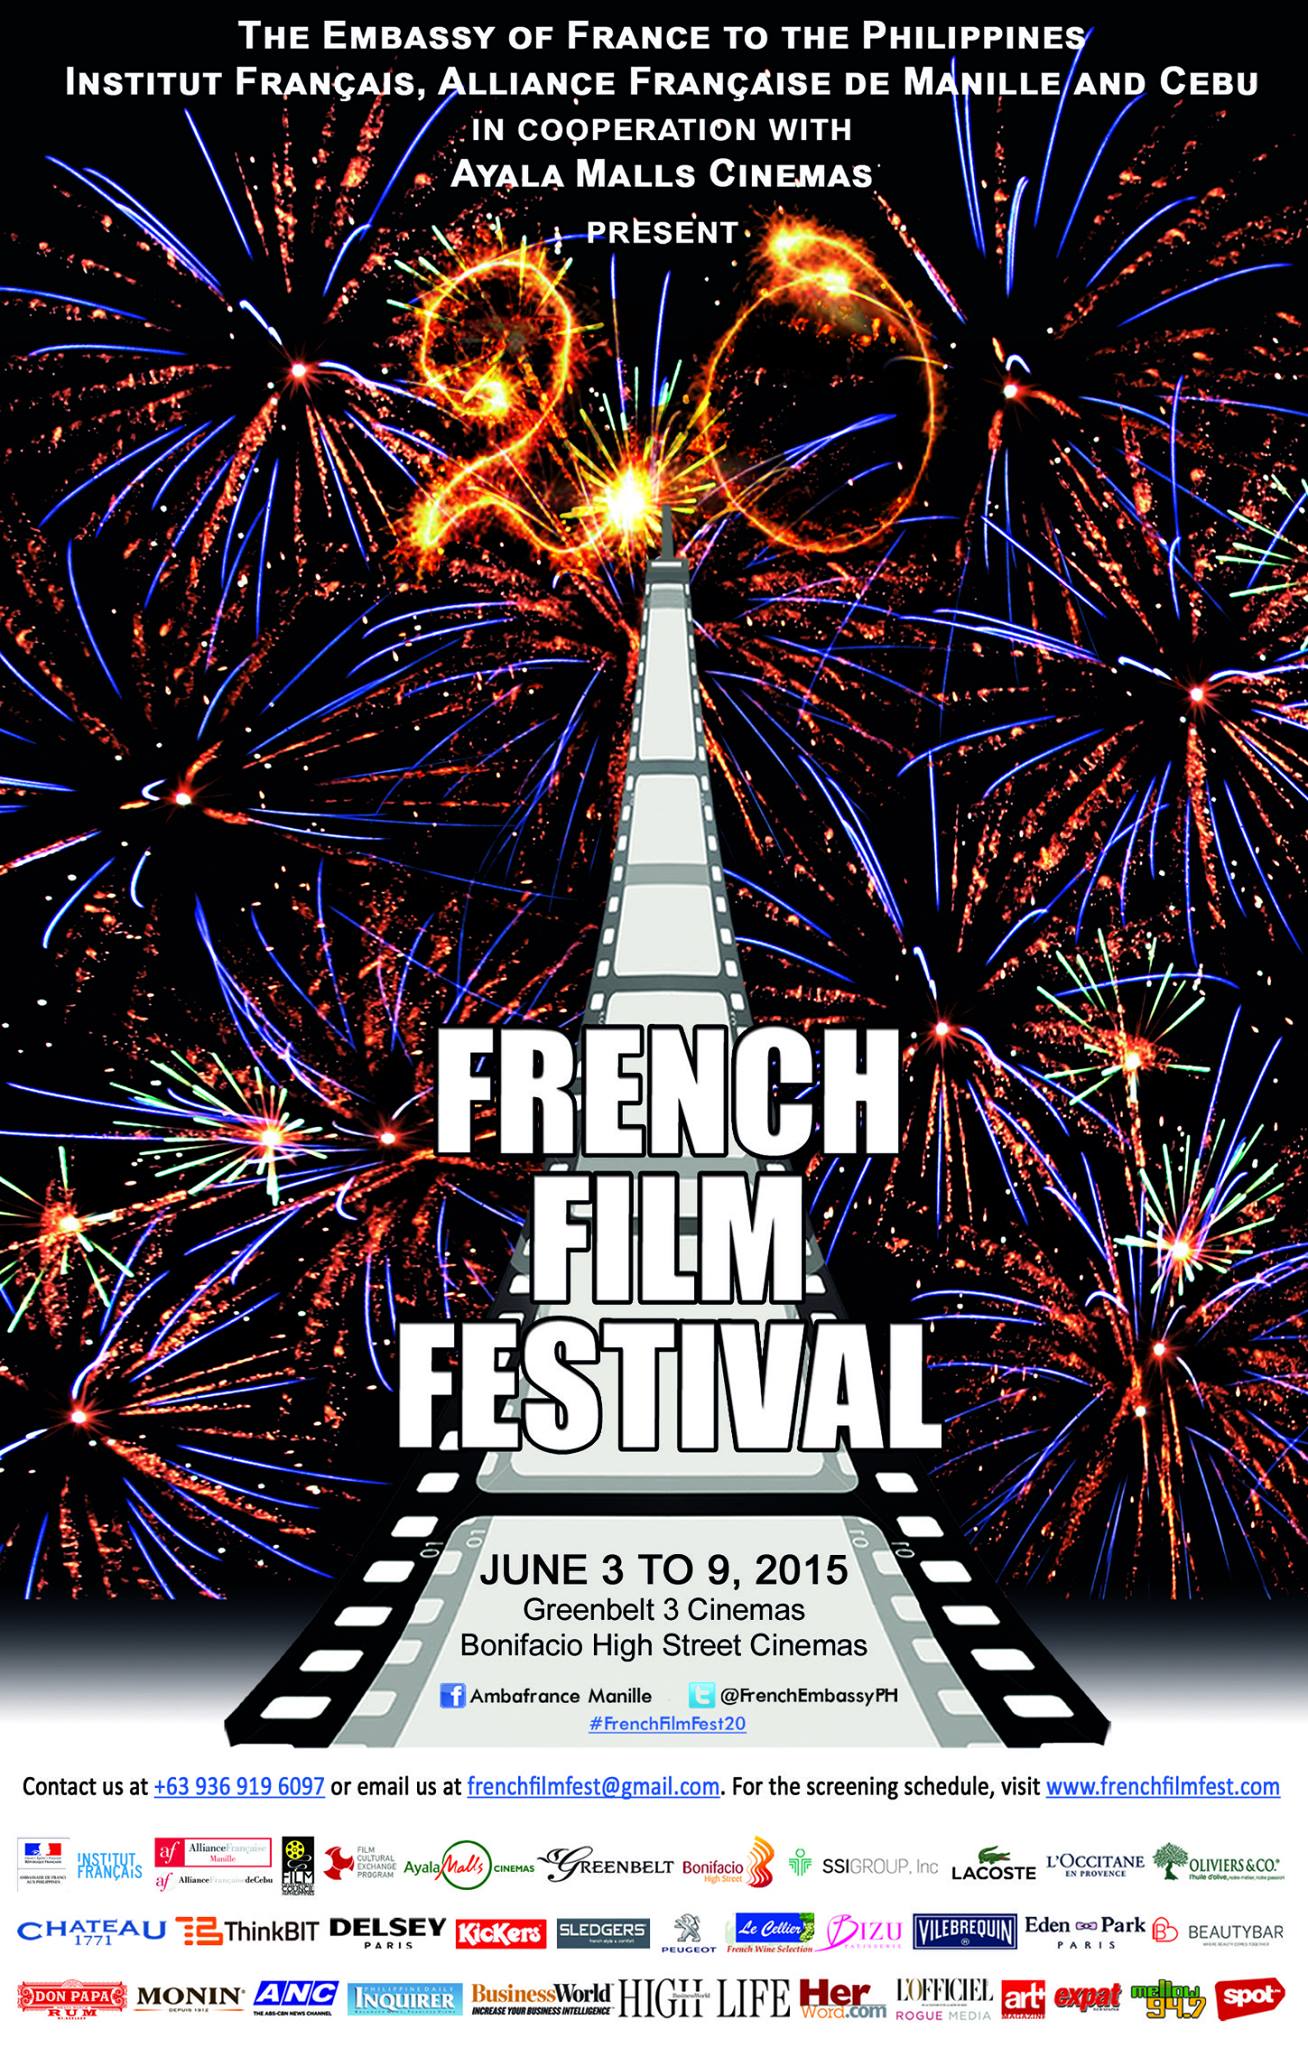 20th French Film Festival Agimat Sining at Kulturang Pinoy